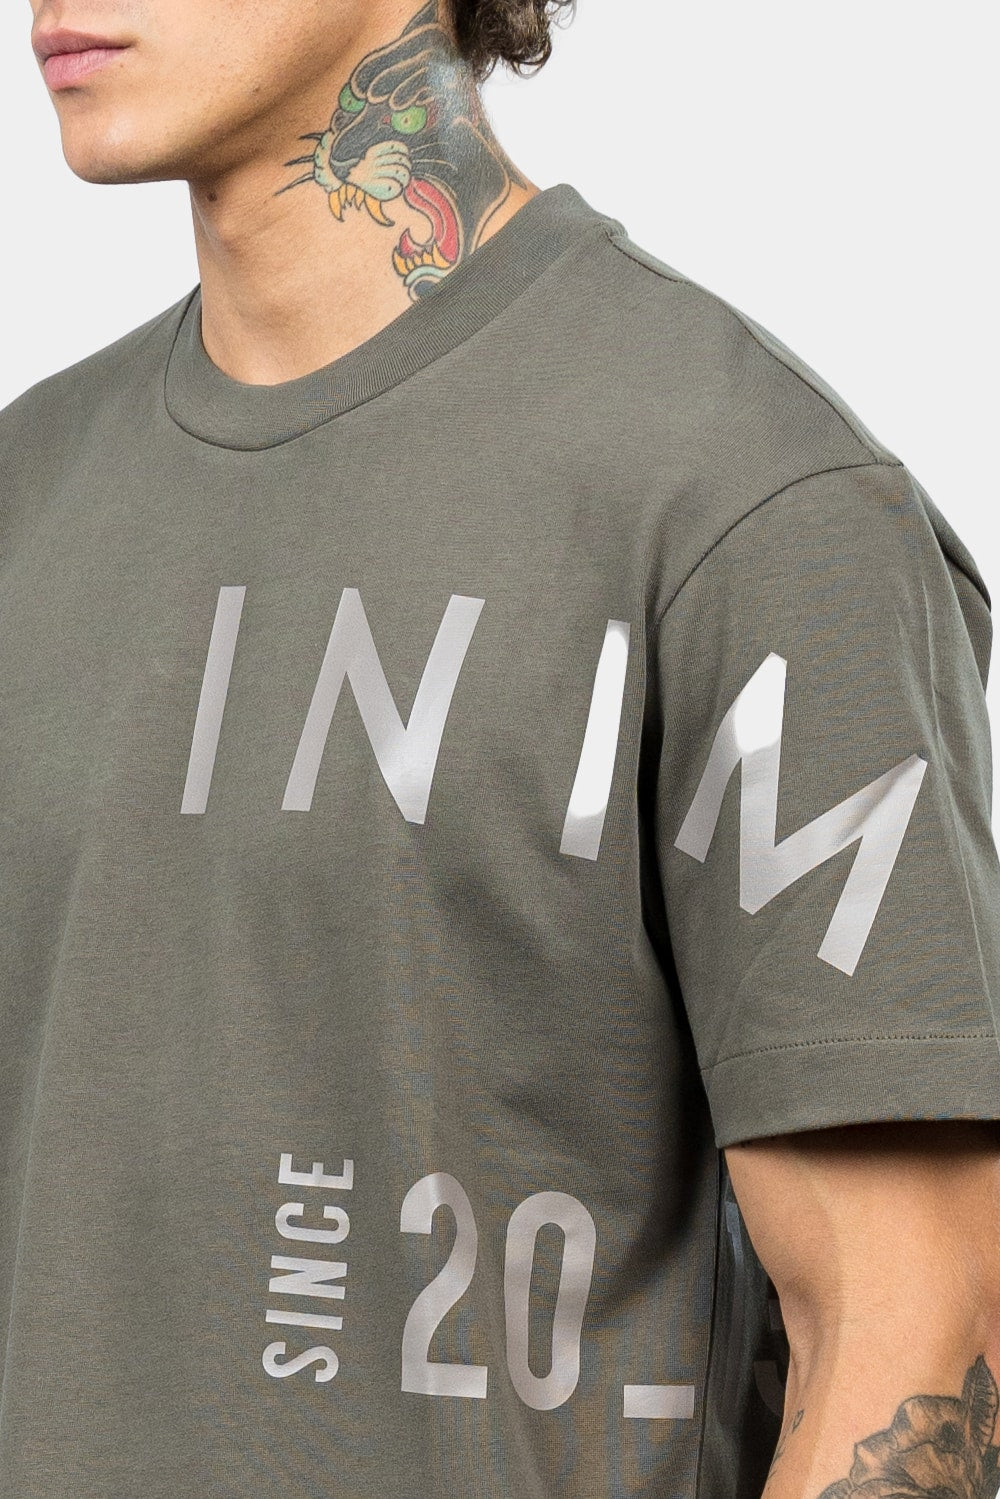 INIMIGO Retro Dimension Comfort T-shirt